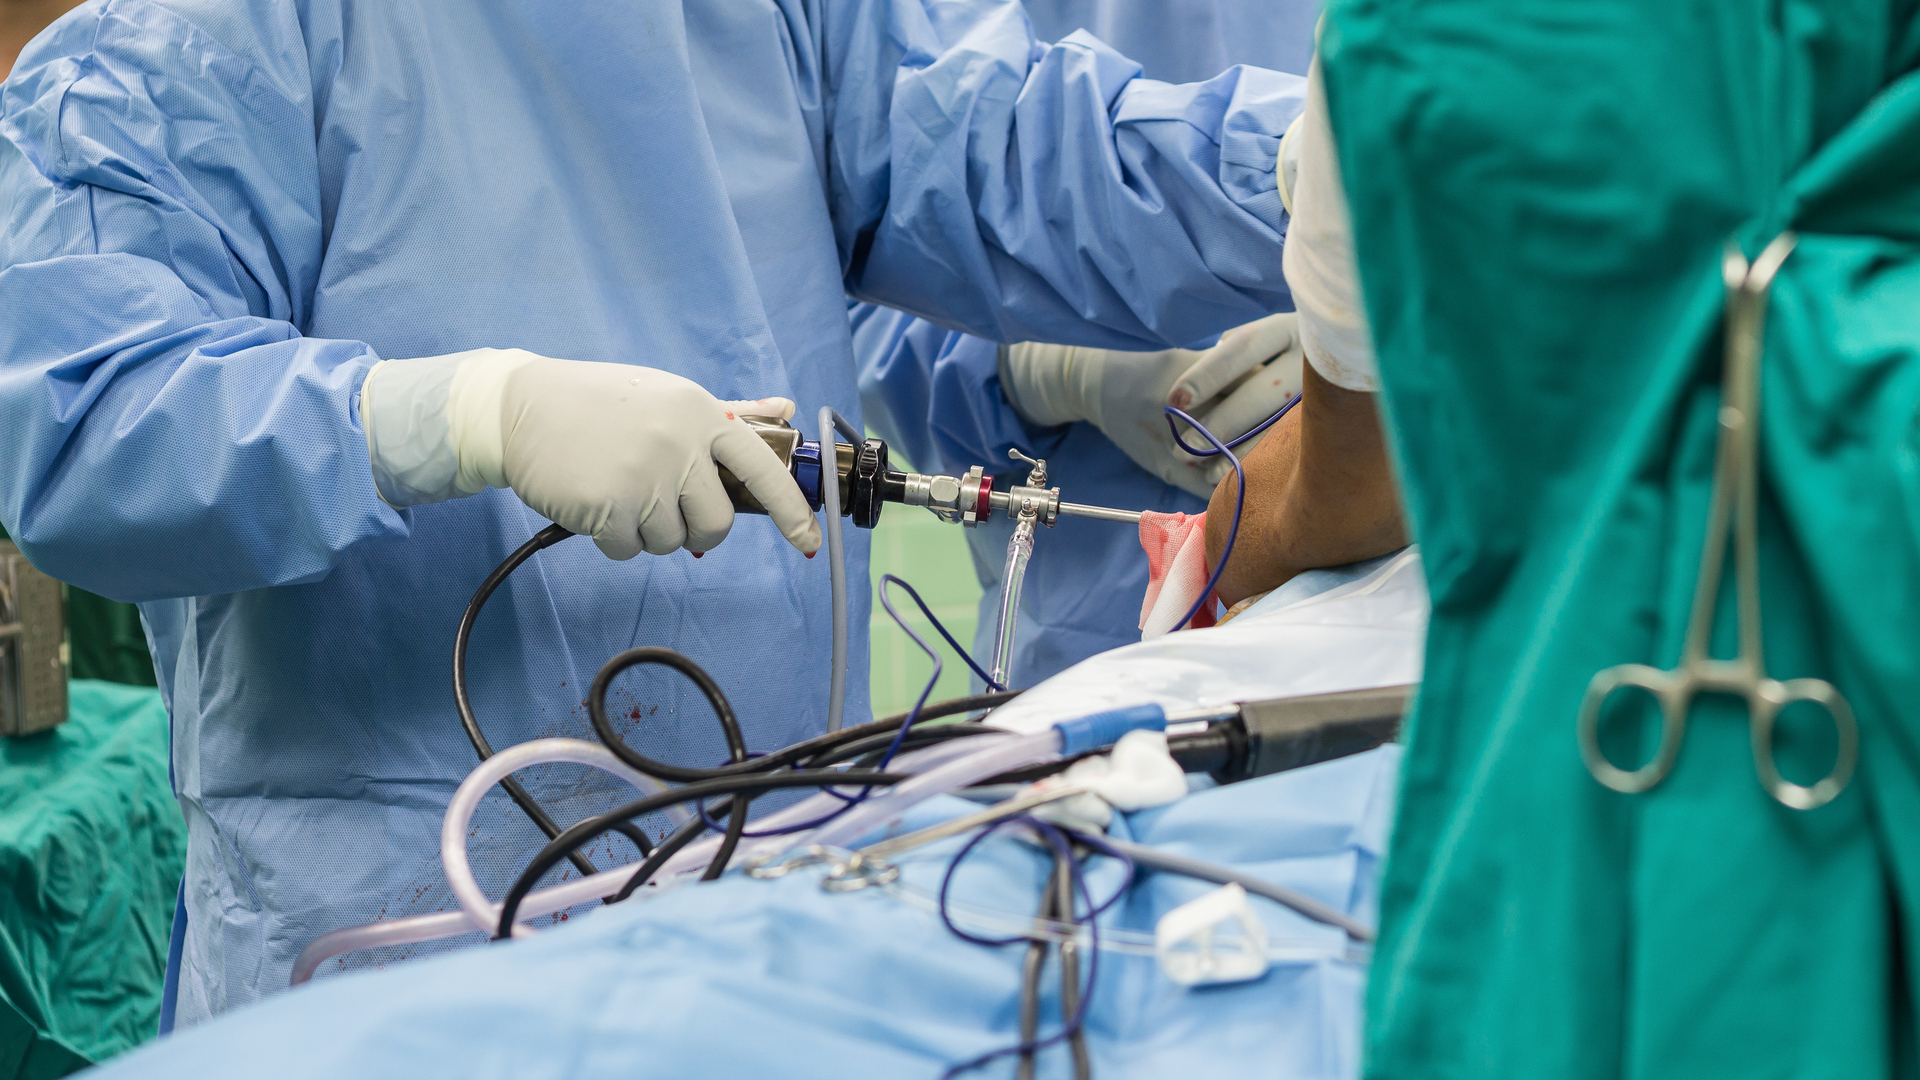 hirurgicheskie operacii na plechevom sustave